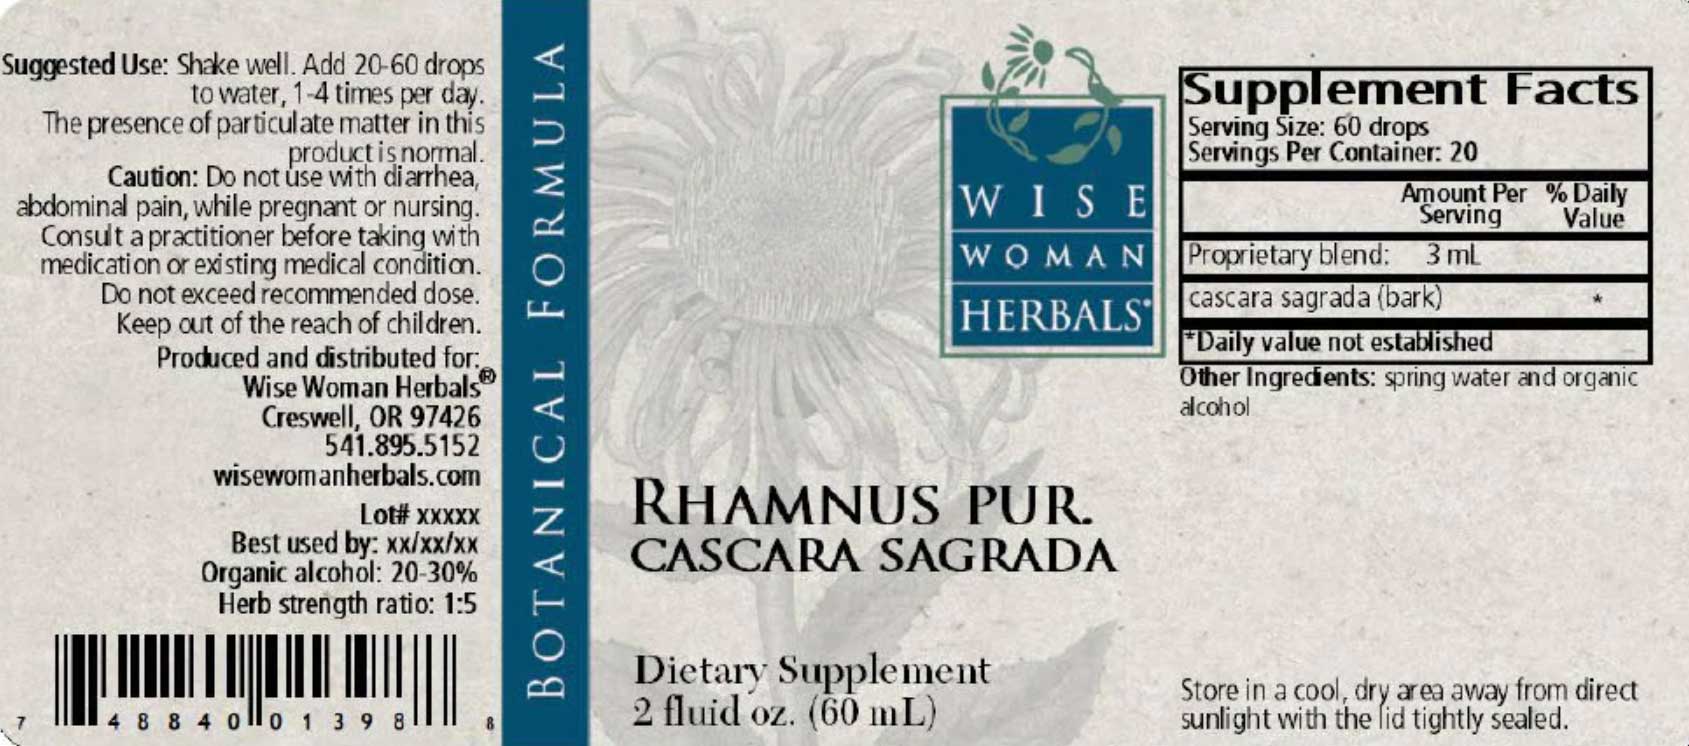 Wise Woman Herbals Rhamnus Purshiana Cascara Sagrada Label